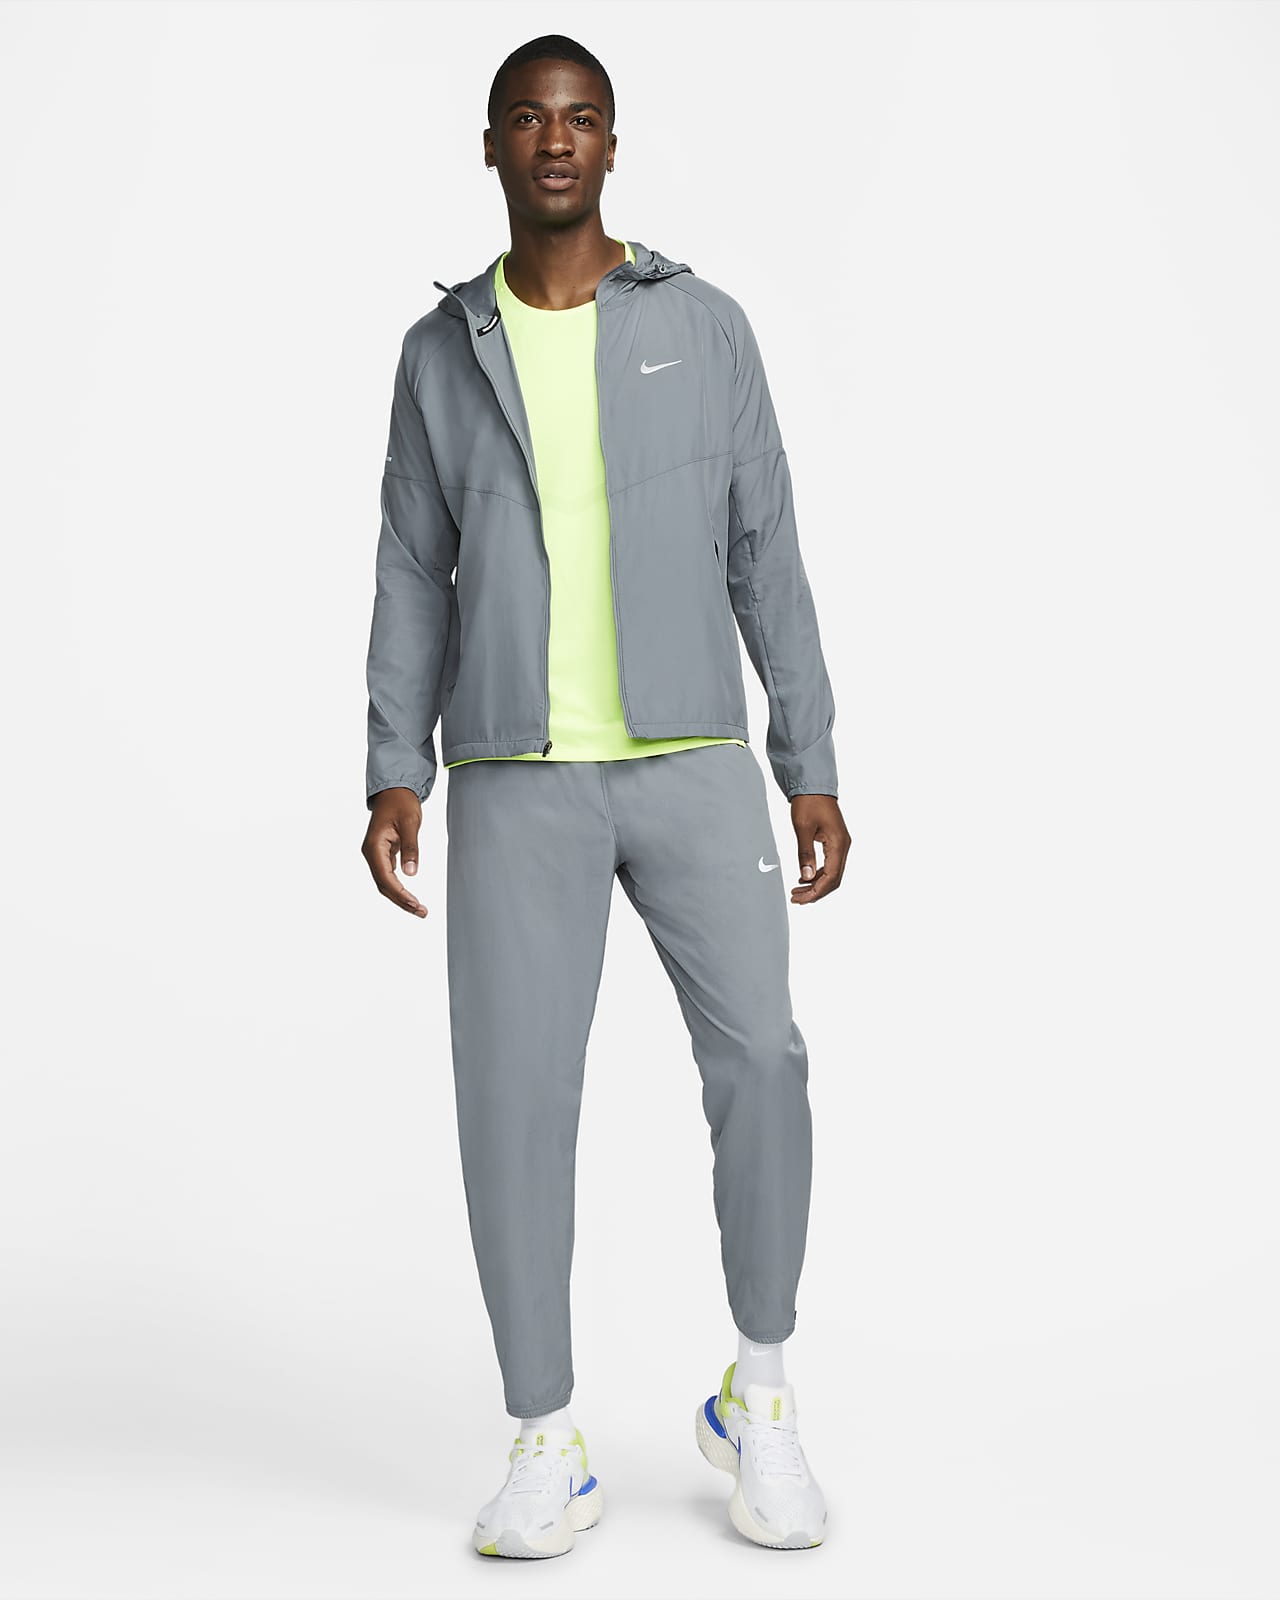 Nike Miler Men's Repel Running Jacket.